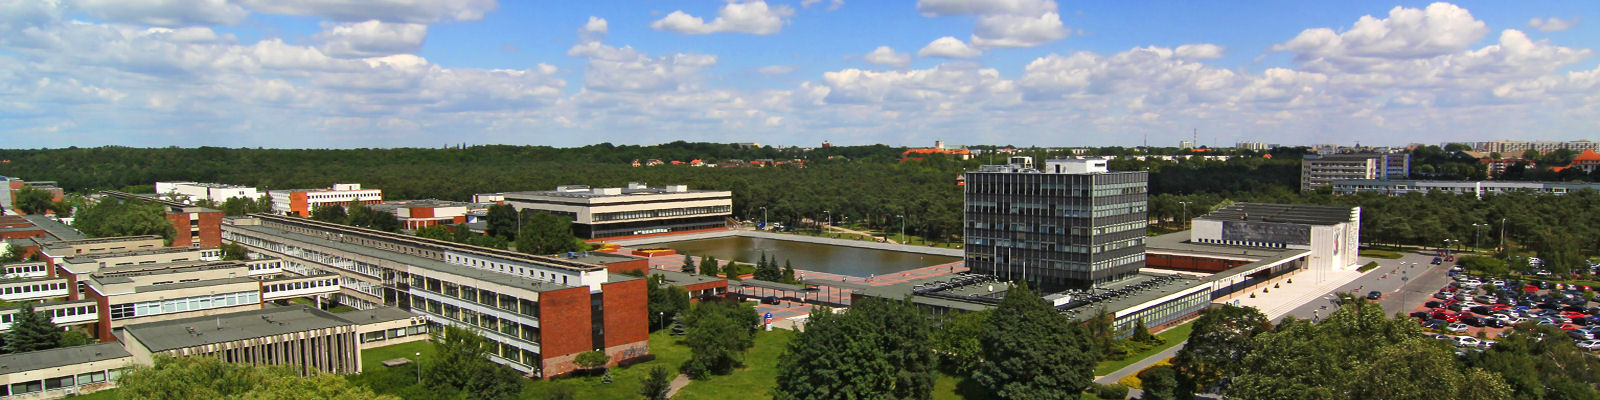 The University - Nicolaus Copernicus University